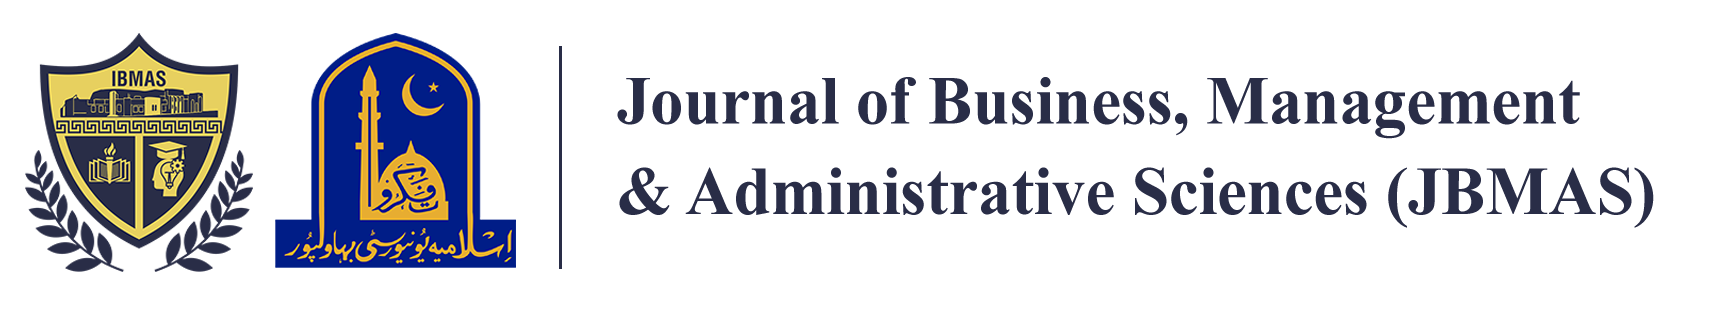 Journal of Business, Management & Administrative Sciences (JBMAS)